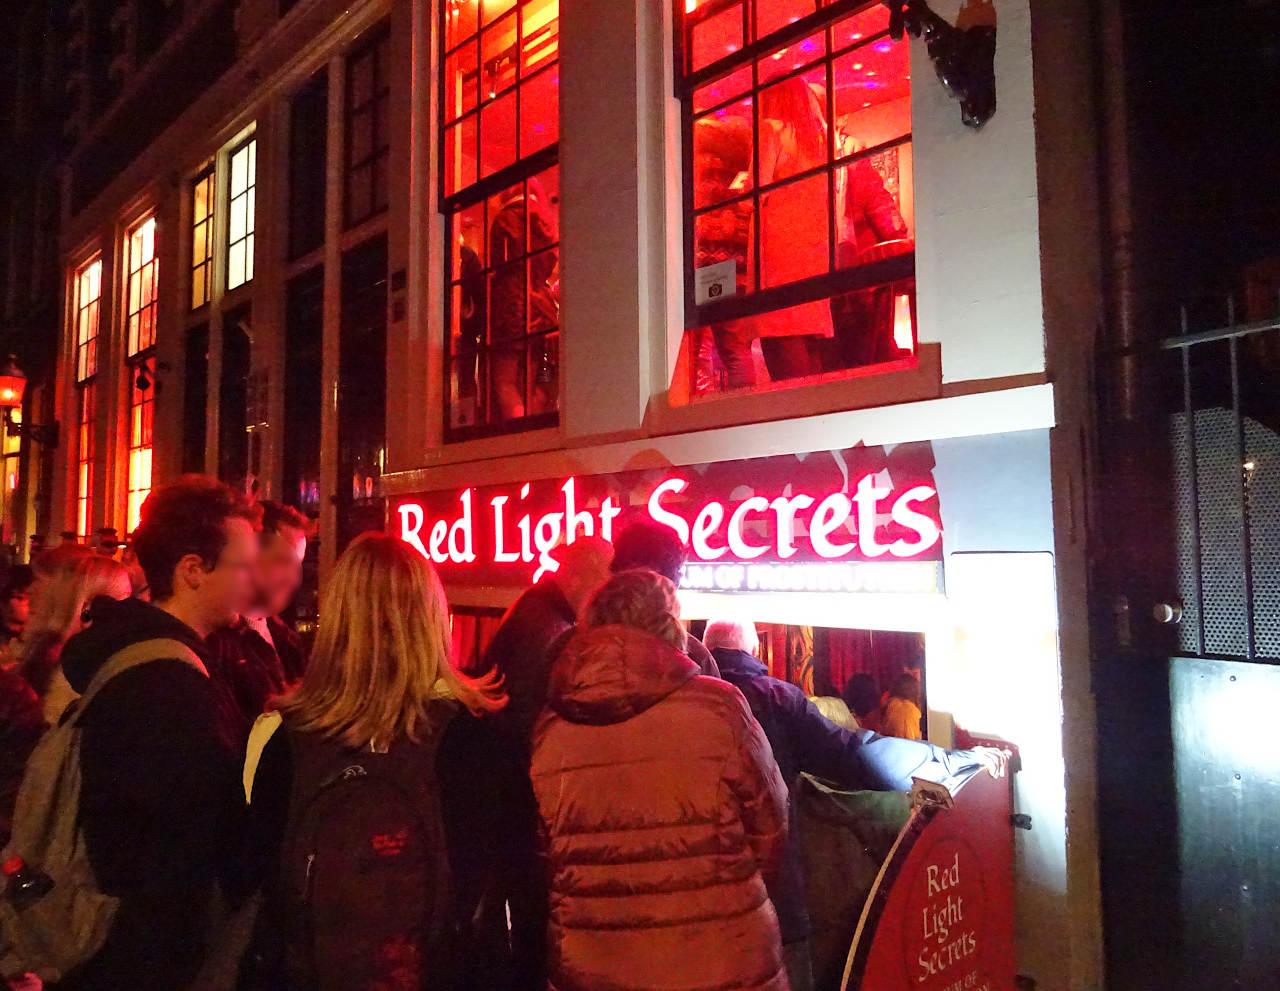 Amsterdam Red Light Secrets